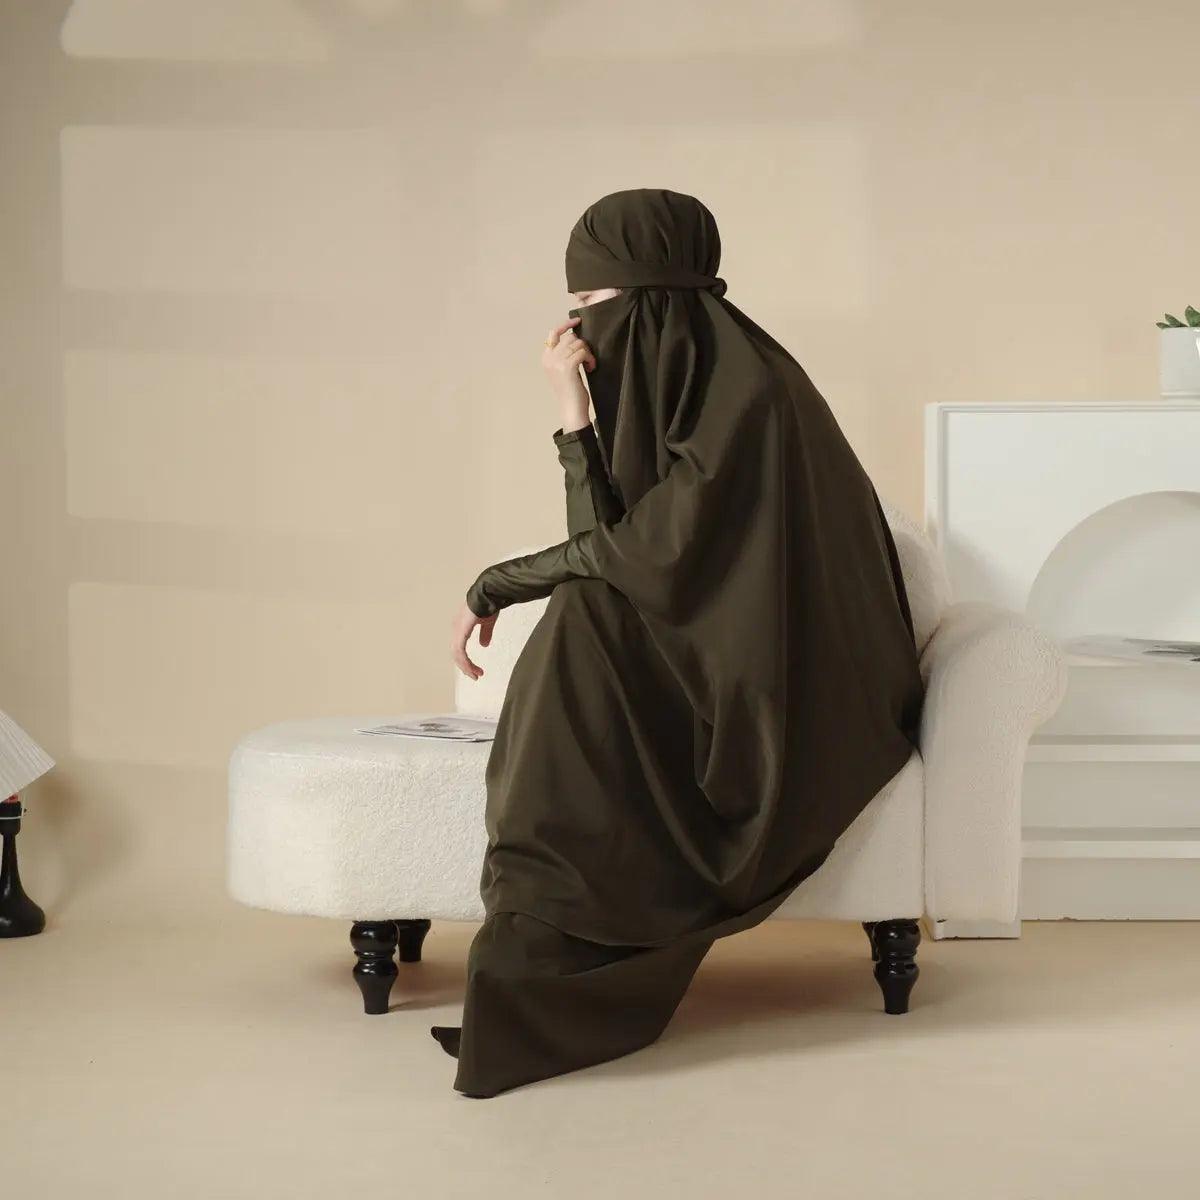 MJ003 Nida 2-Piece Set Jilbab with Modal Cuff Mariam's Collection